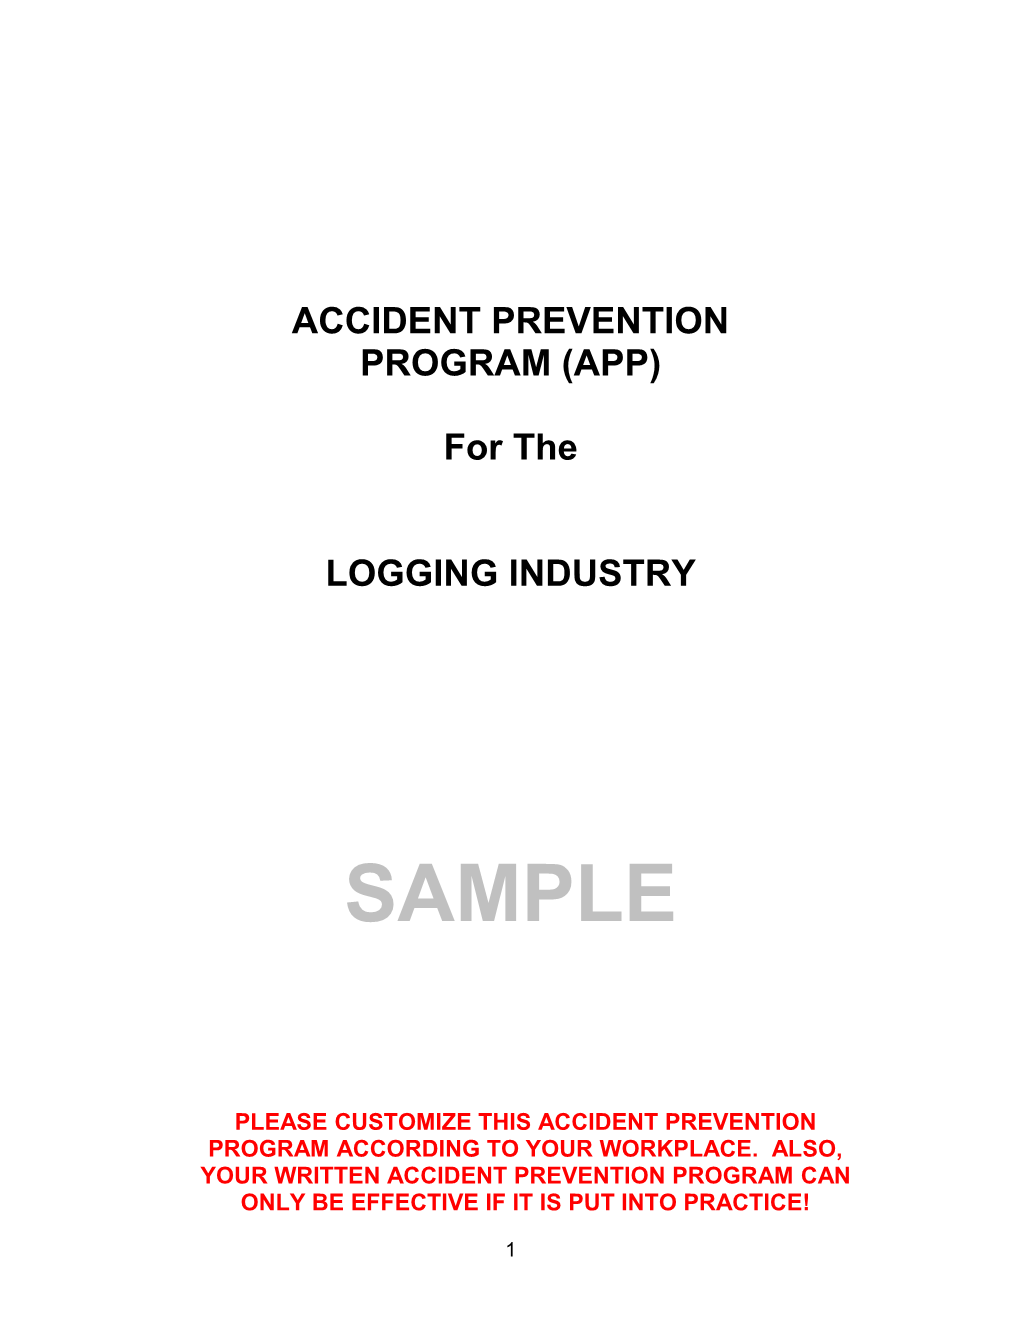 Sample Accident Prevention Program (APP) for Logging